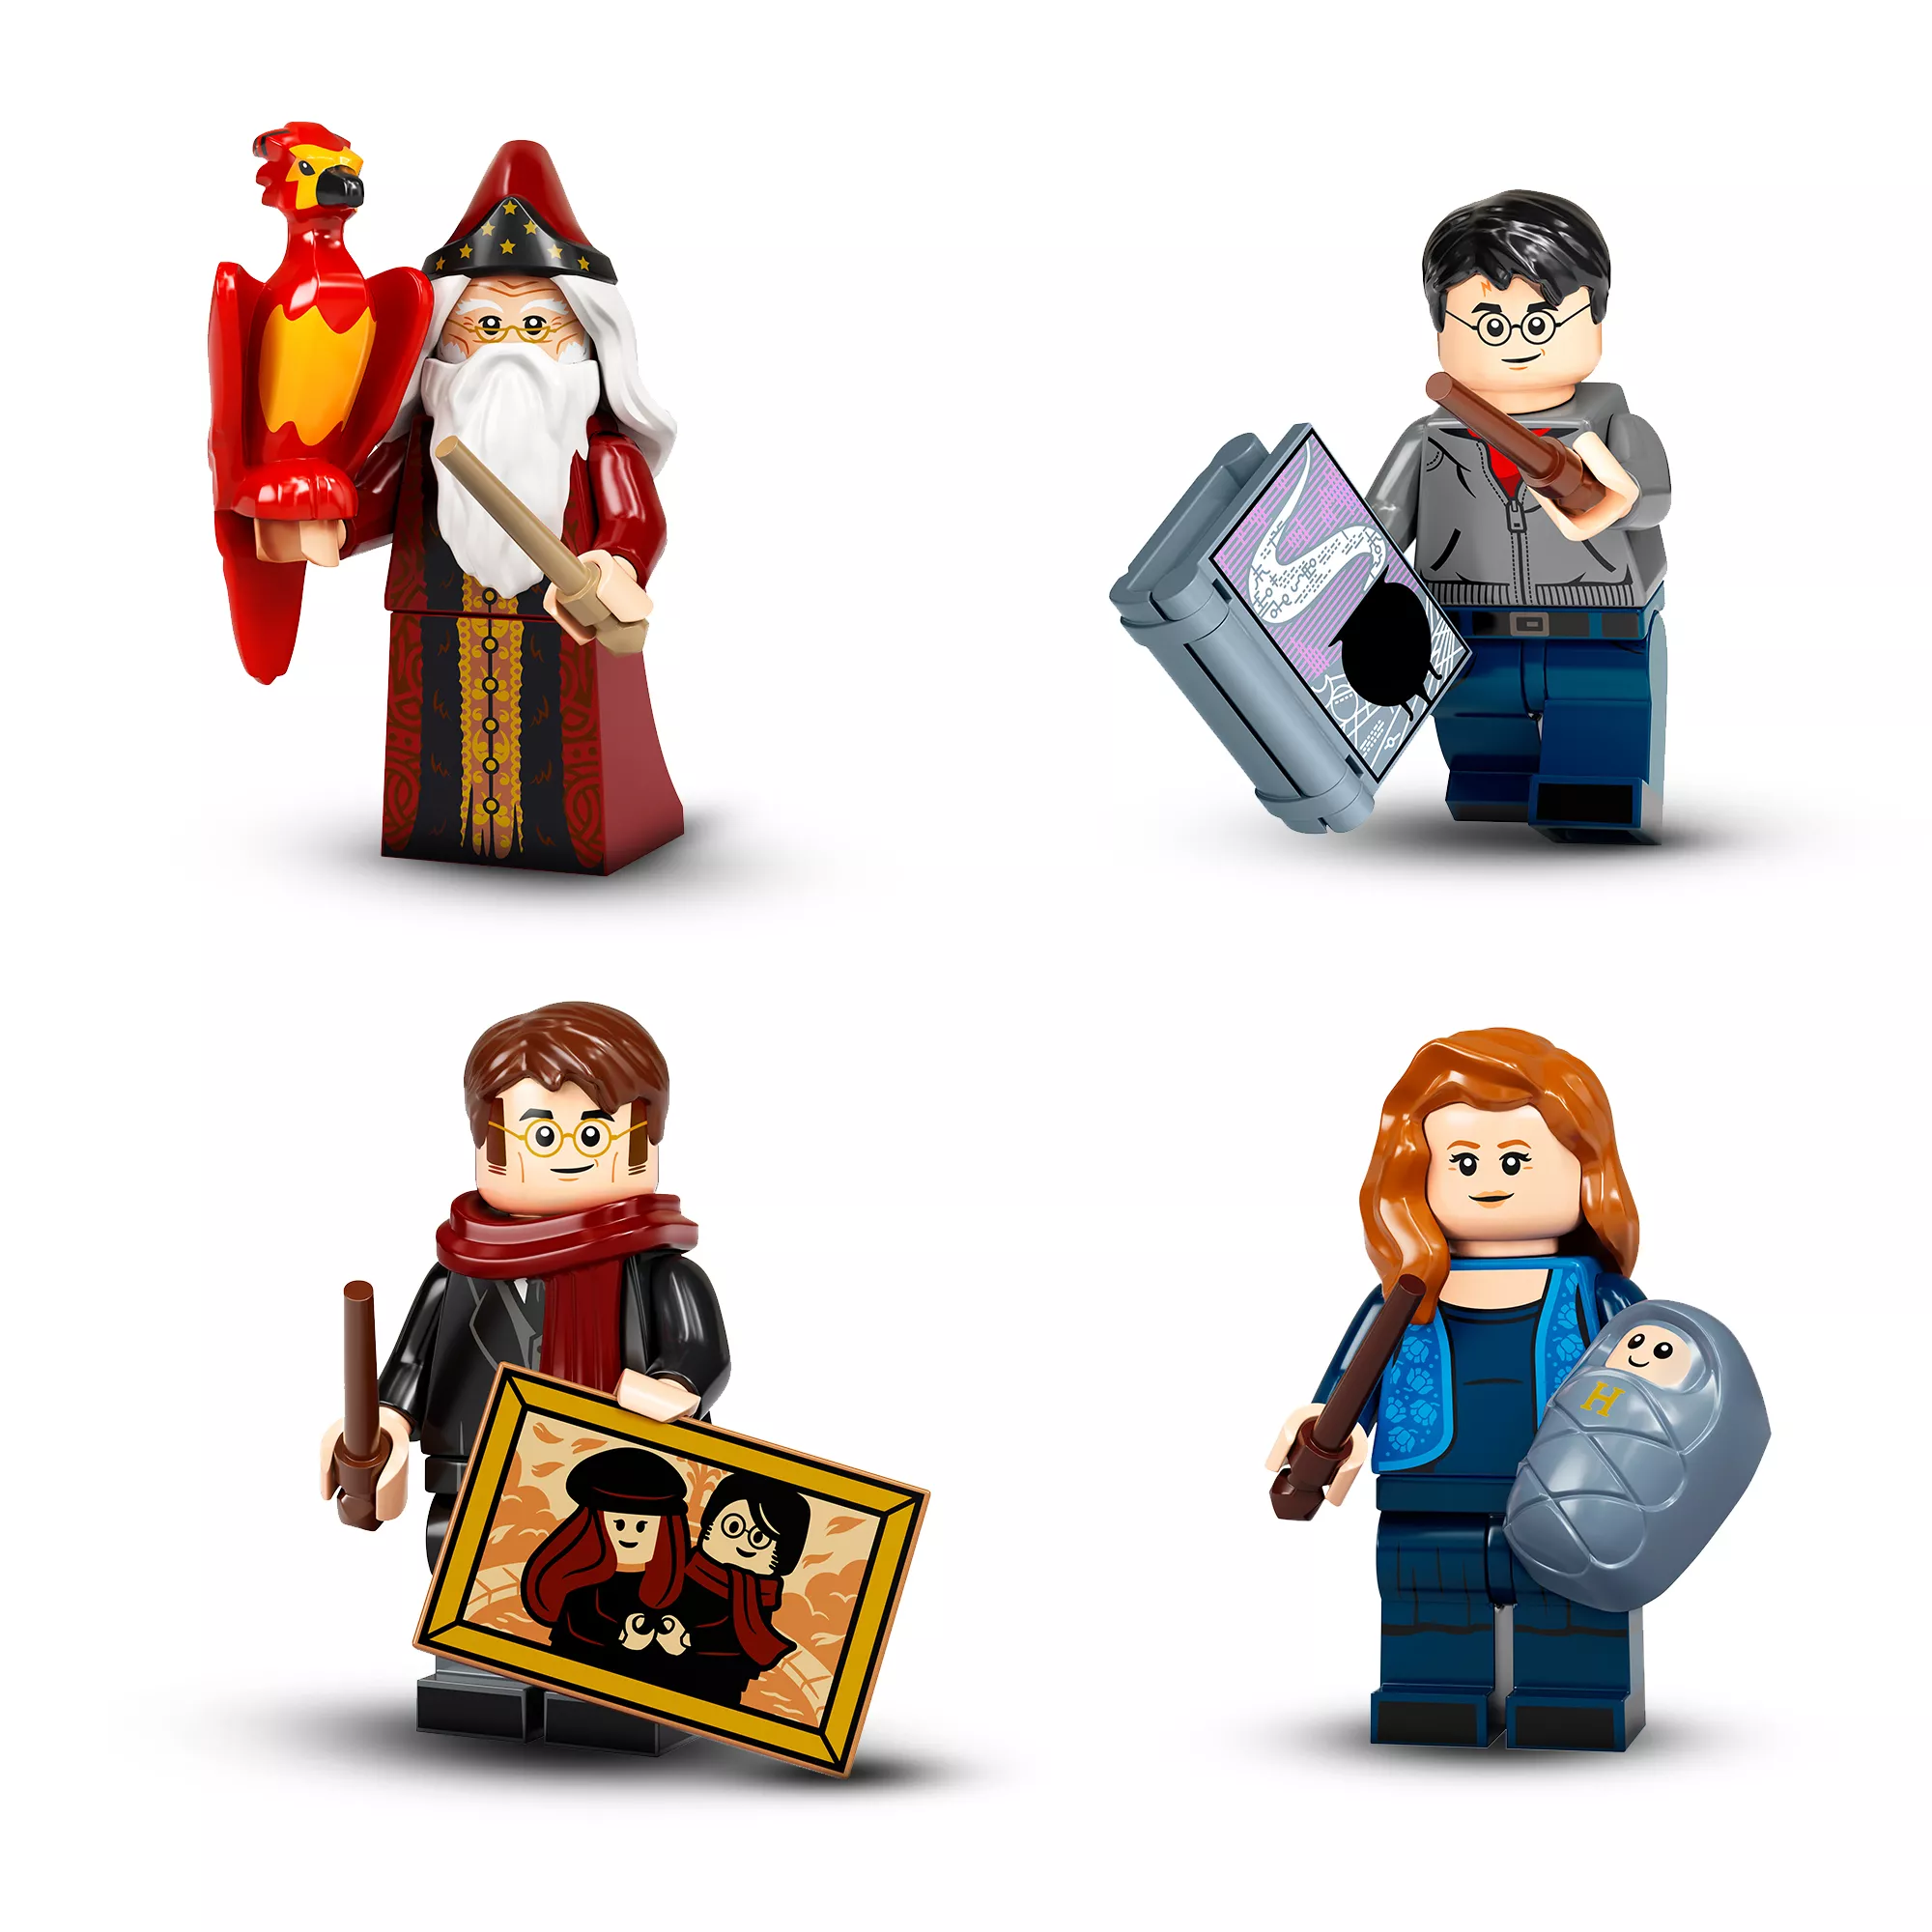 LEGO Minifigures Harry Potter Serie 2 - 71028